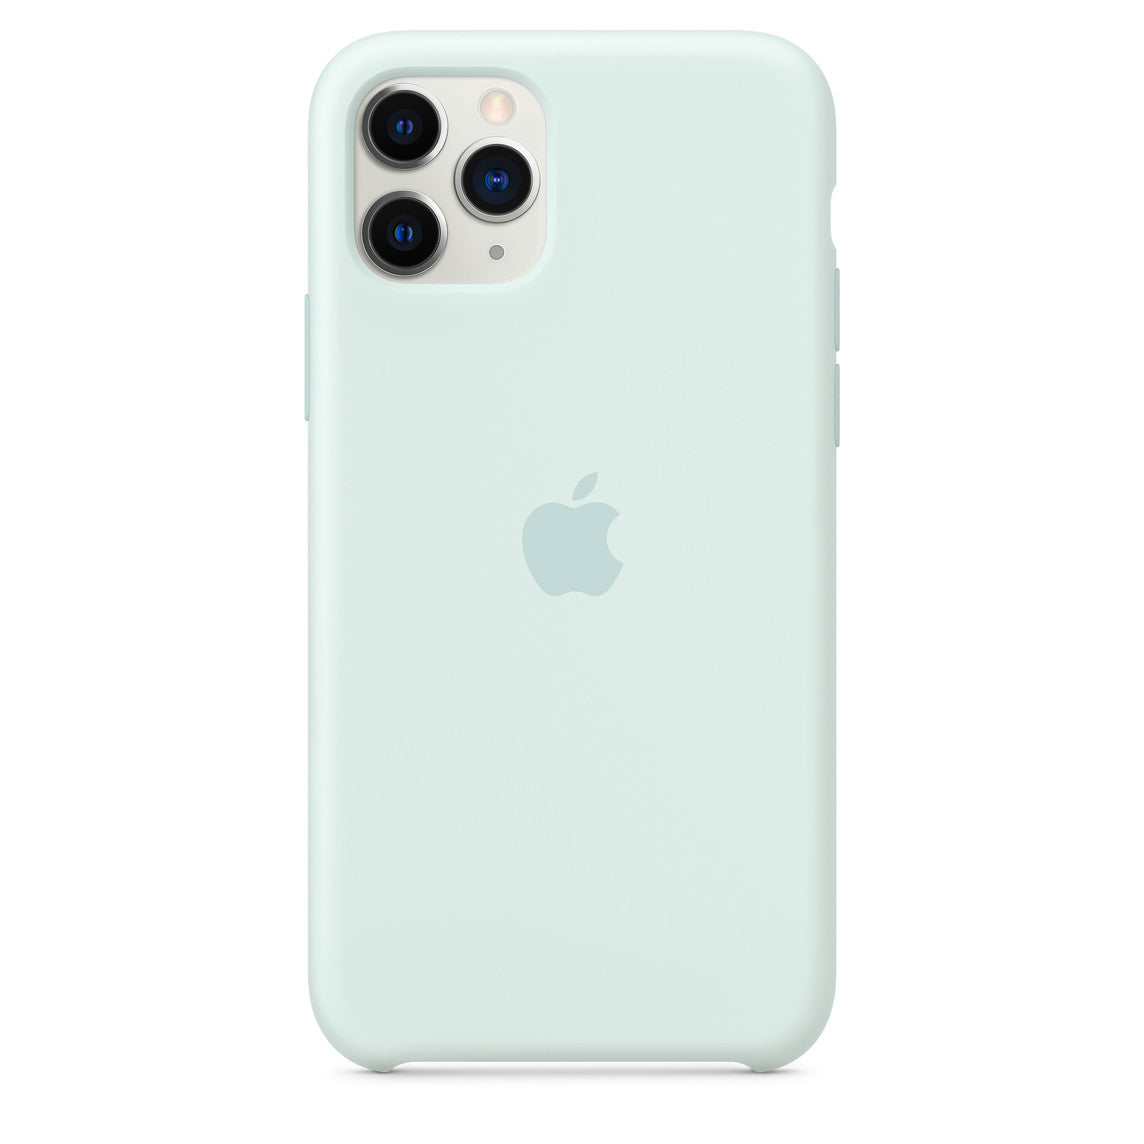 Apple iPhone 11 Pro Silicone Case - Seafoam